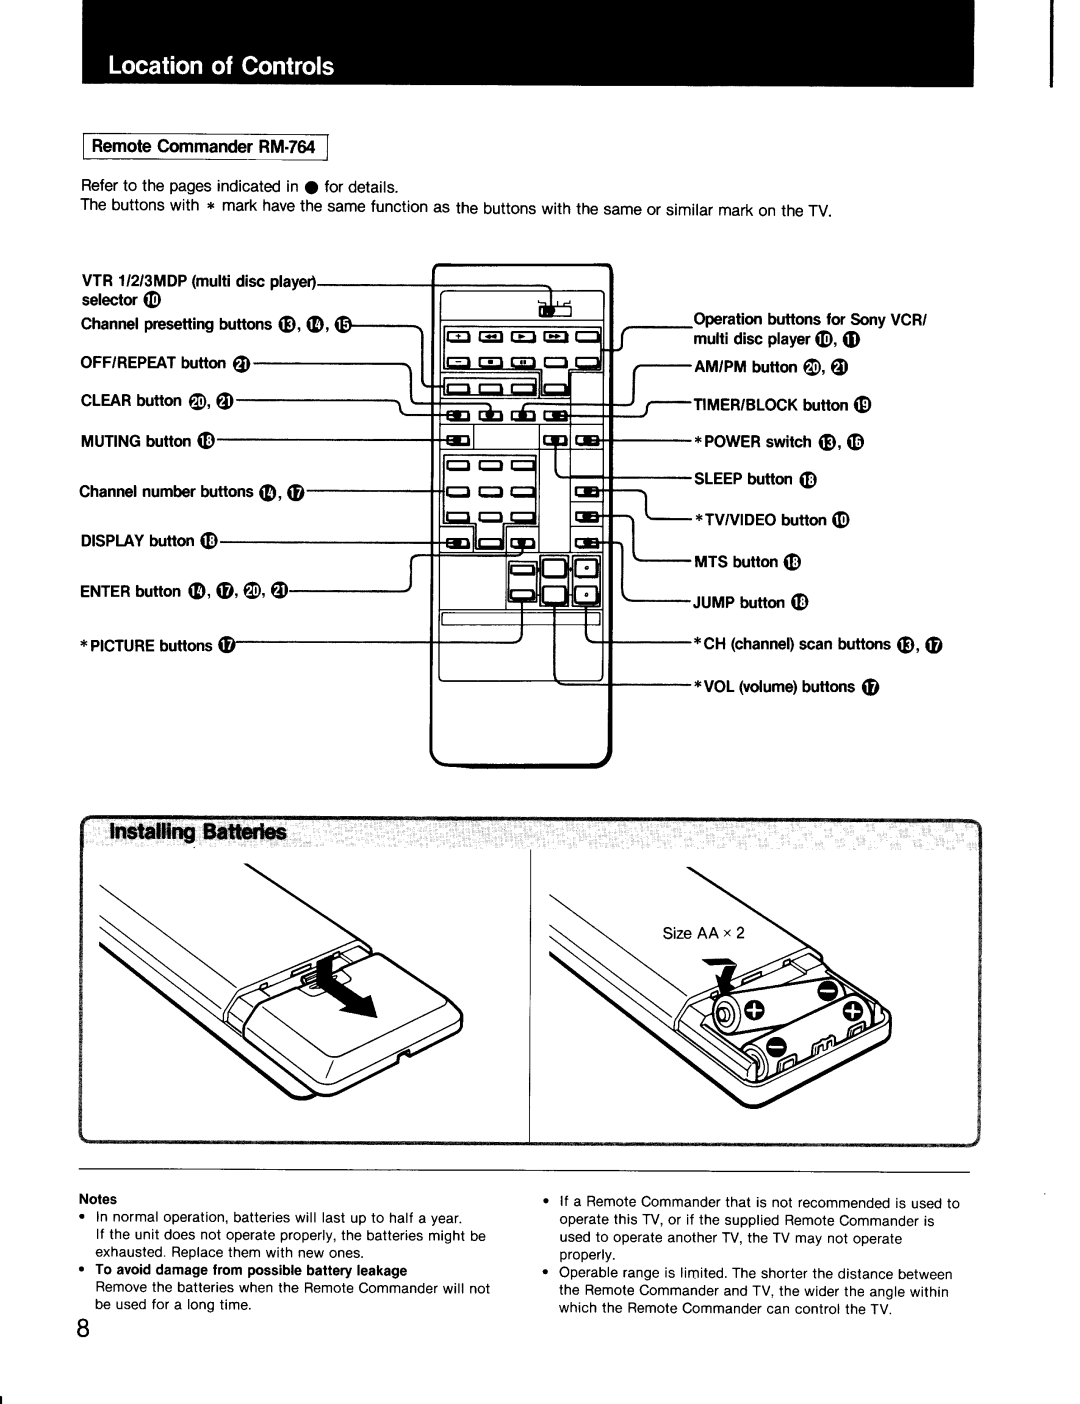 Sony trinitron color tv manual 